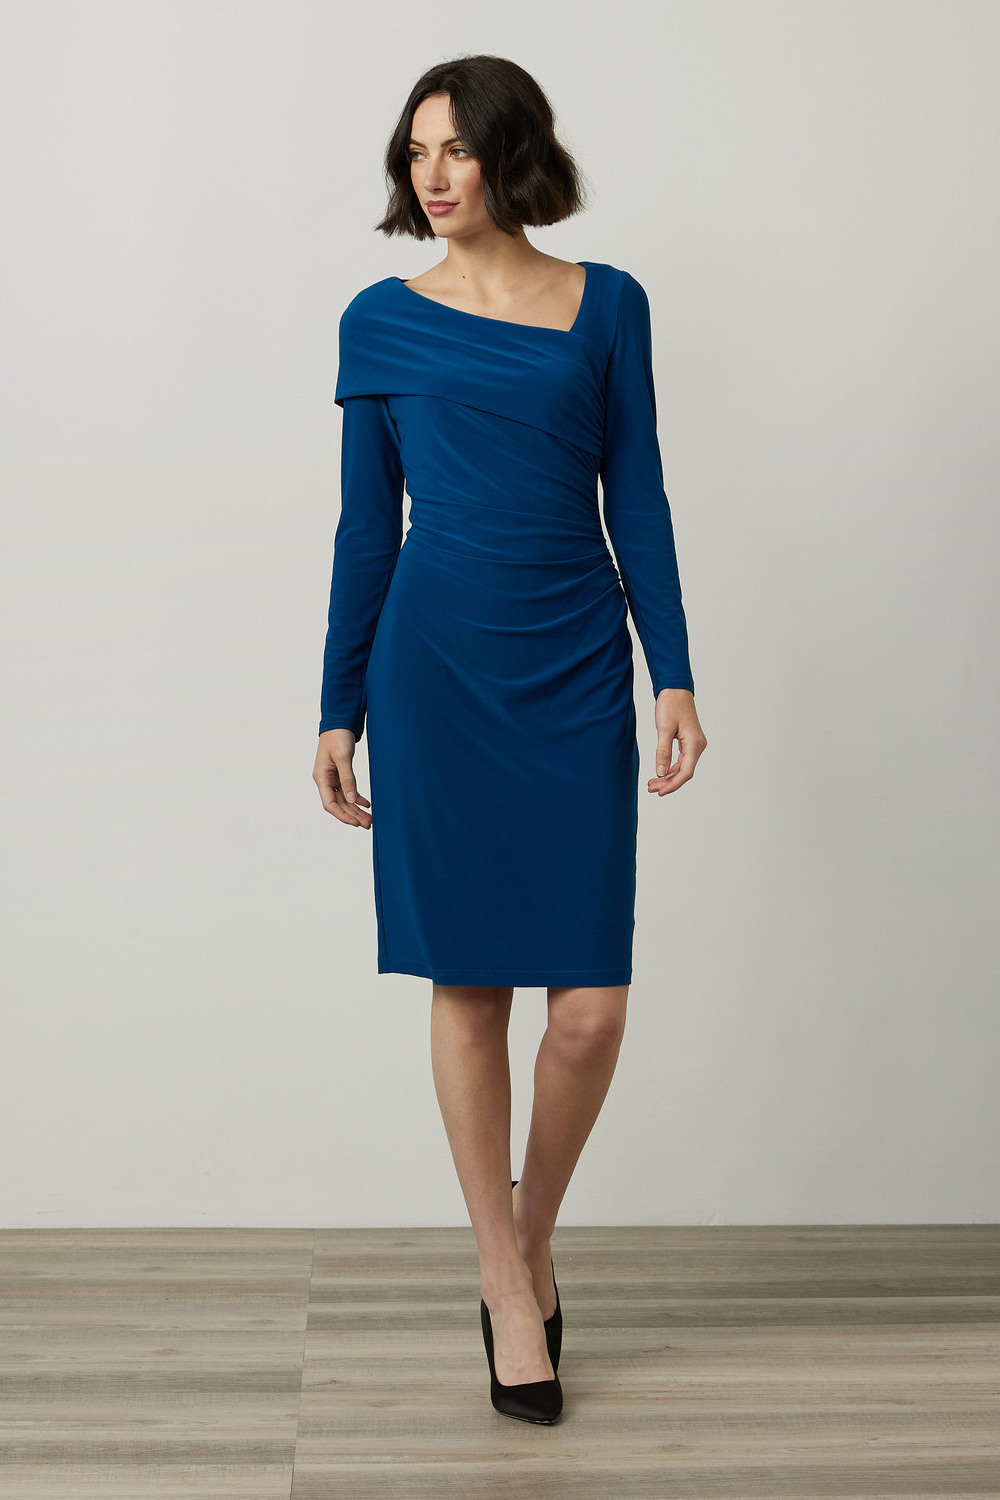 Joseph Ribkoff Ruched Dress Style 214079. Aquarius